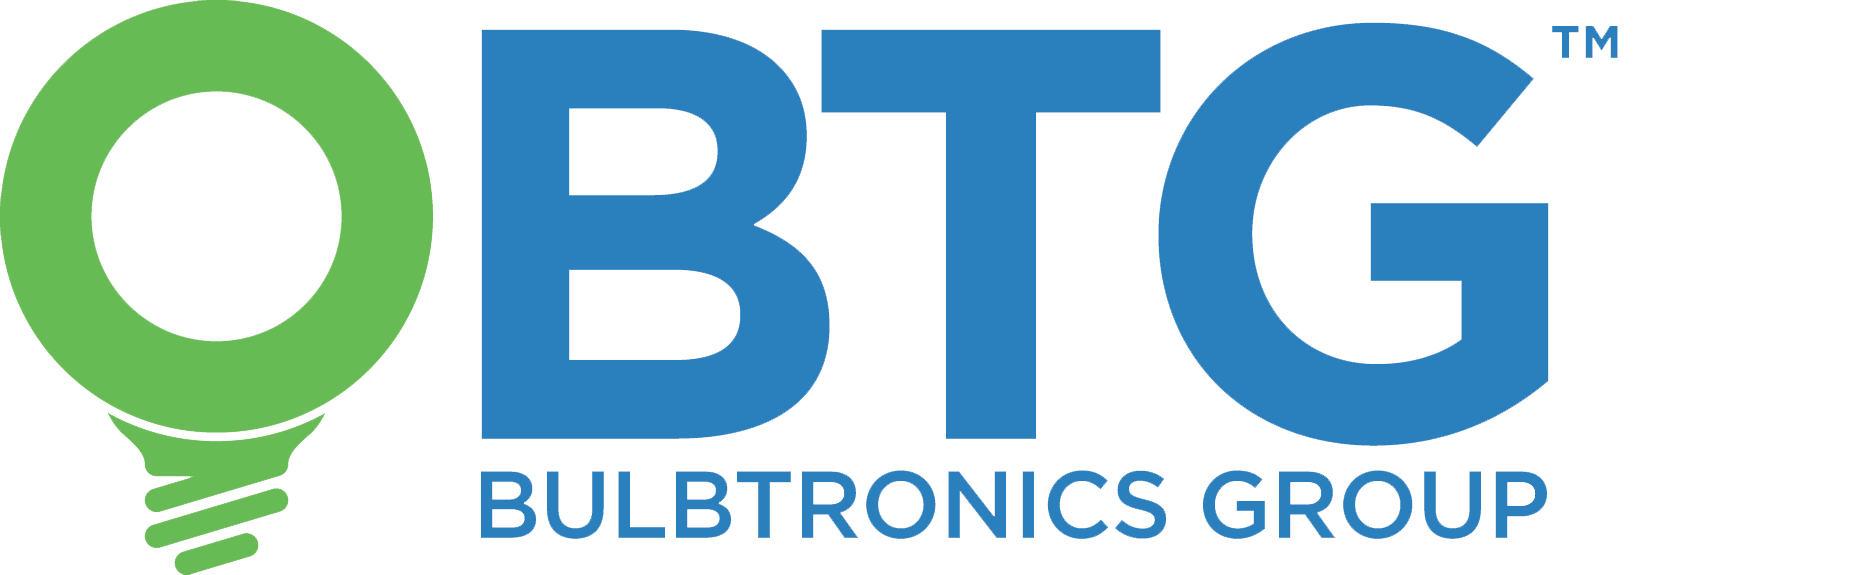 BTG logo